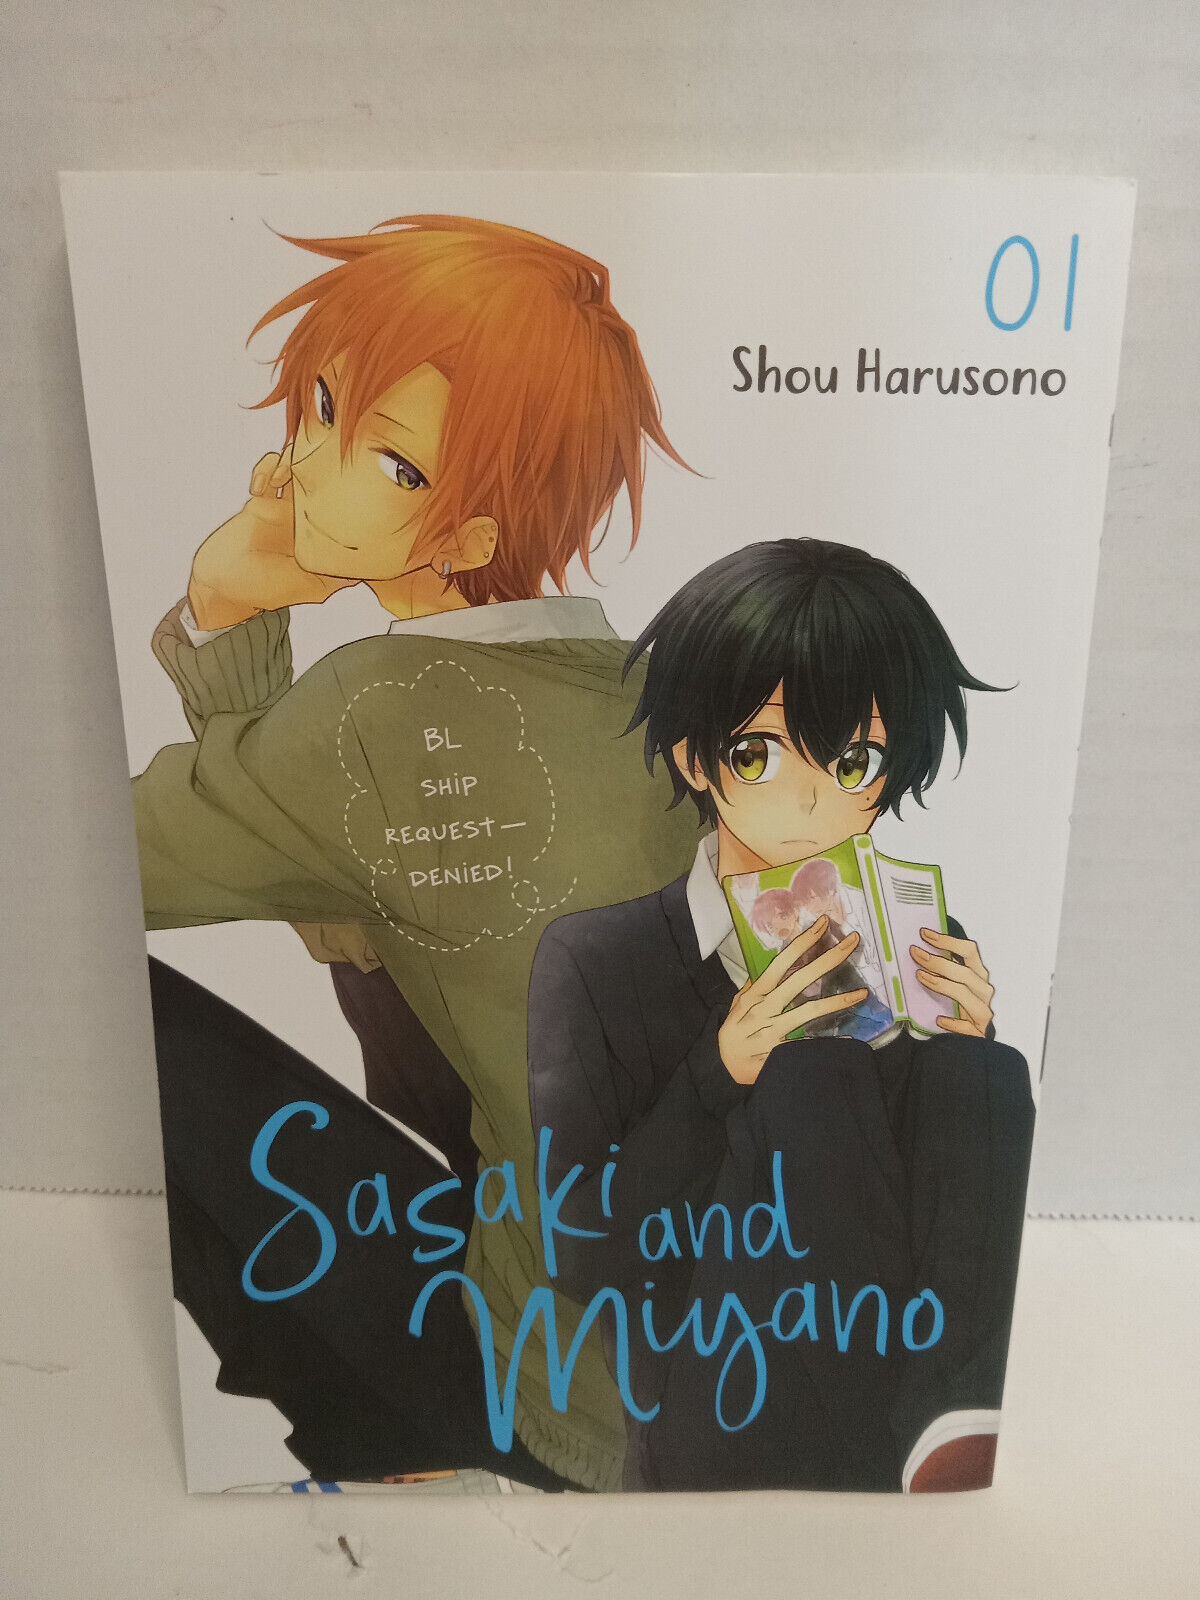 Primary image for Book Manga Sasaki and Miyano Volume 1 Shou Harusono